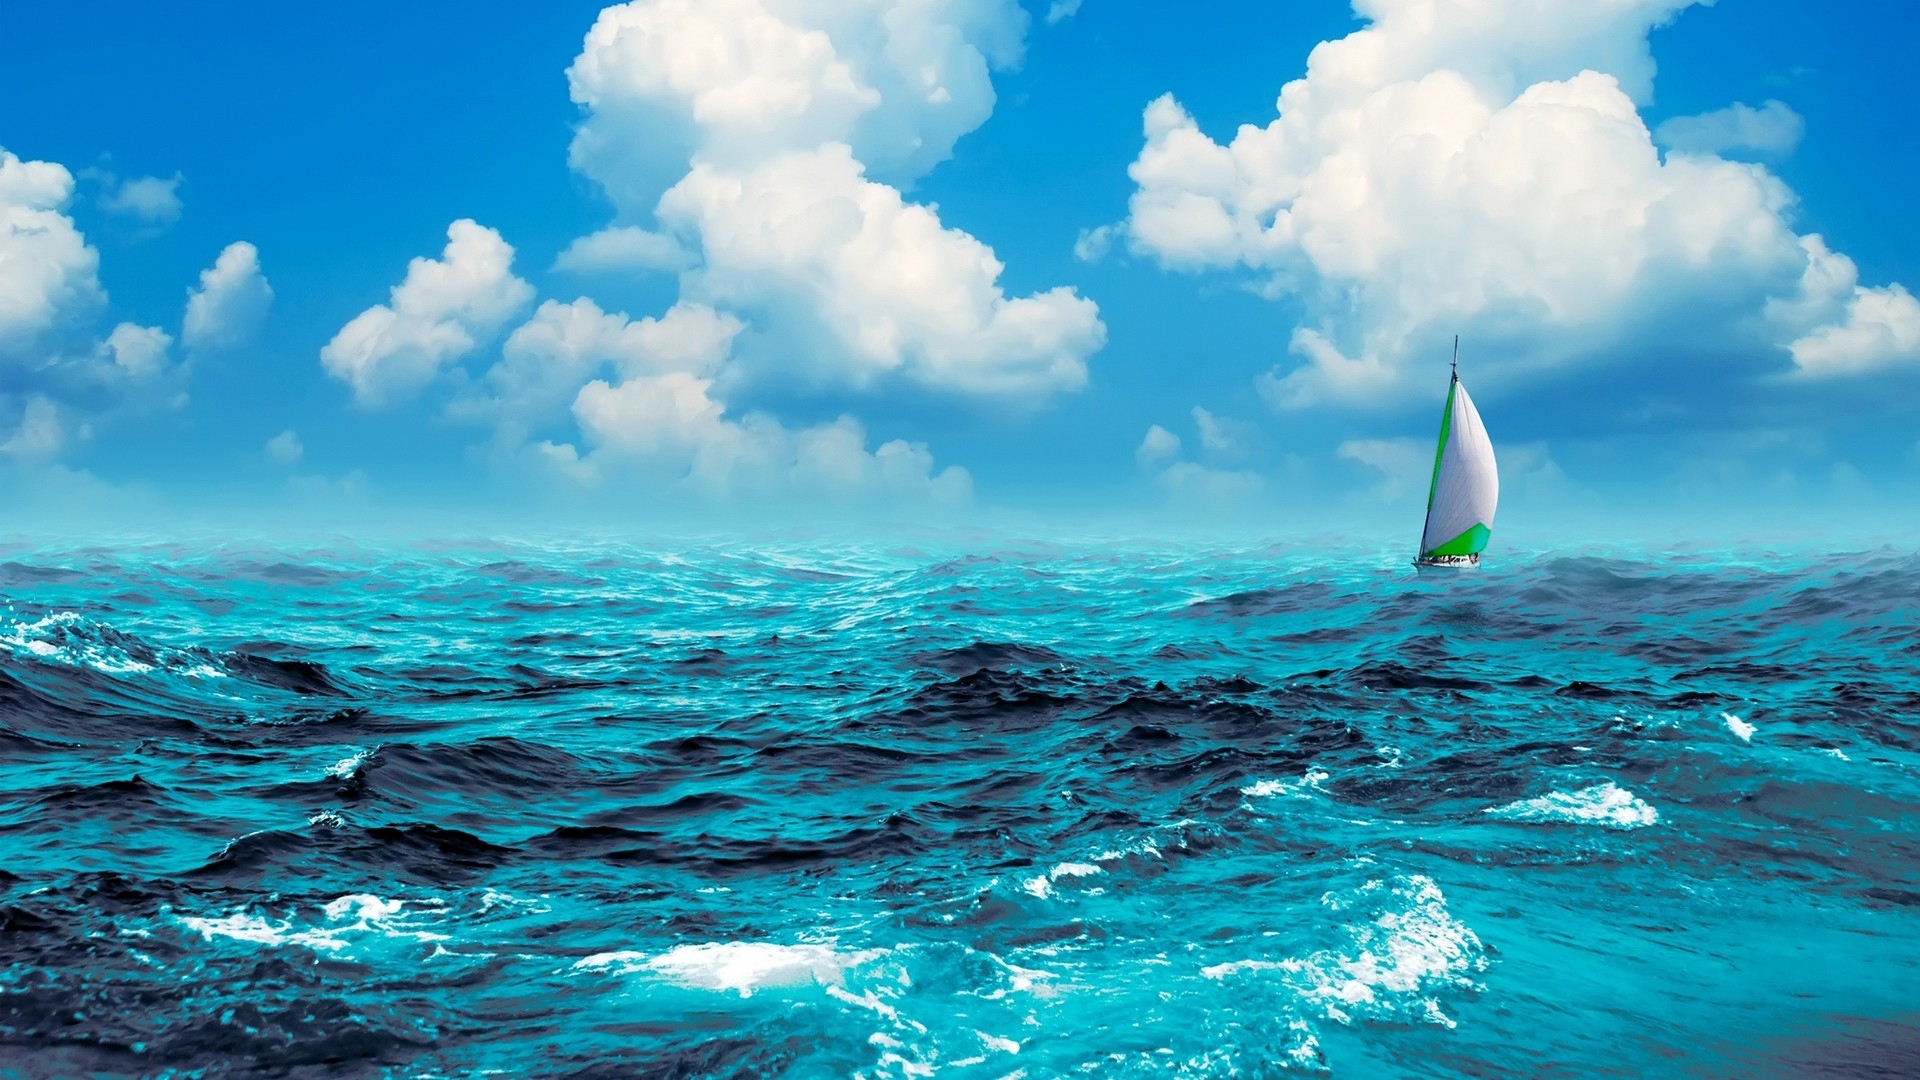 manipulation, Cg, Digital, Art, Artistic, Nature, Ocean, Sea, Waves, Swell, Water, Sky, Clouds, Sailing, Sports, Boat, Ship, Sailboat Wallpaper